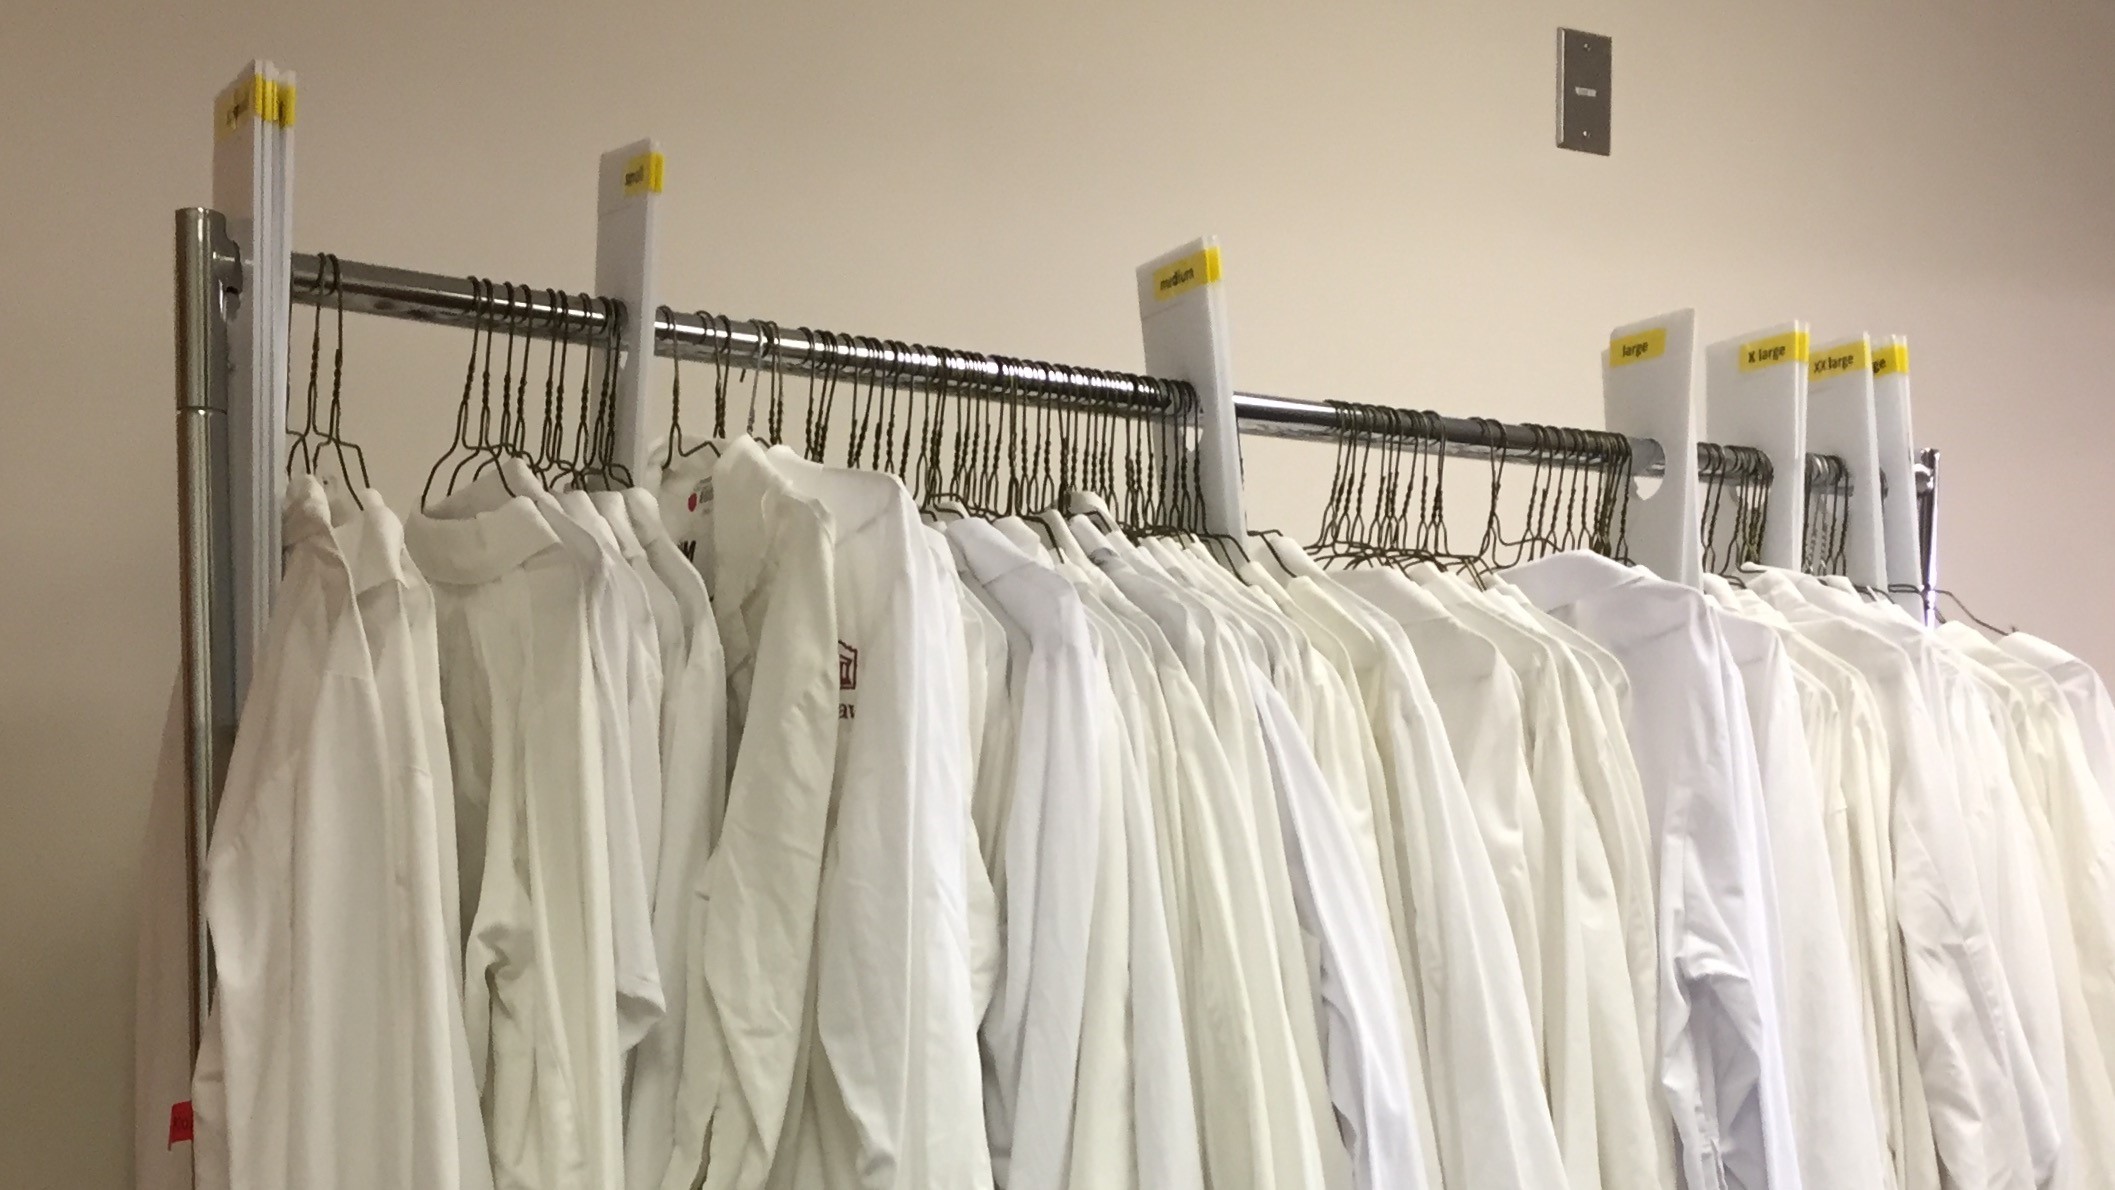 Lab coats hanging on rack.